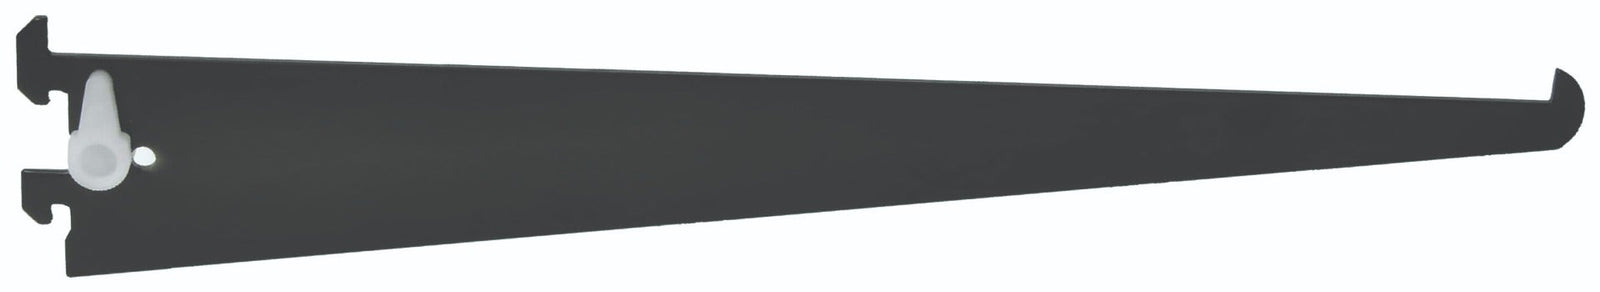 Slotted Standard Knife Shelf Brackets - Eddie's Hang-Up Display Ltd.